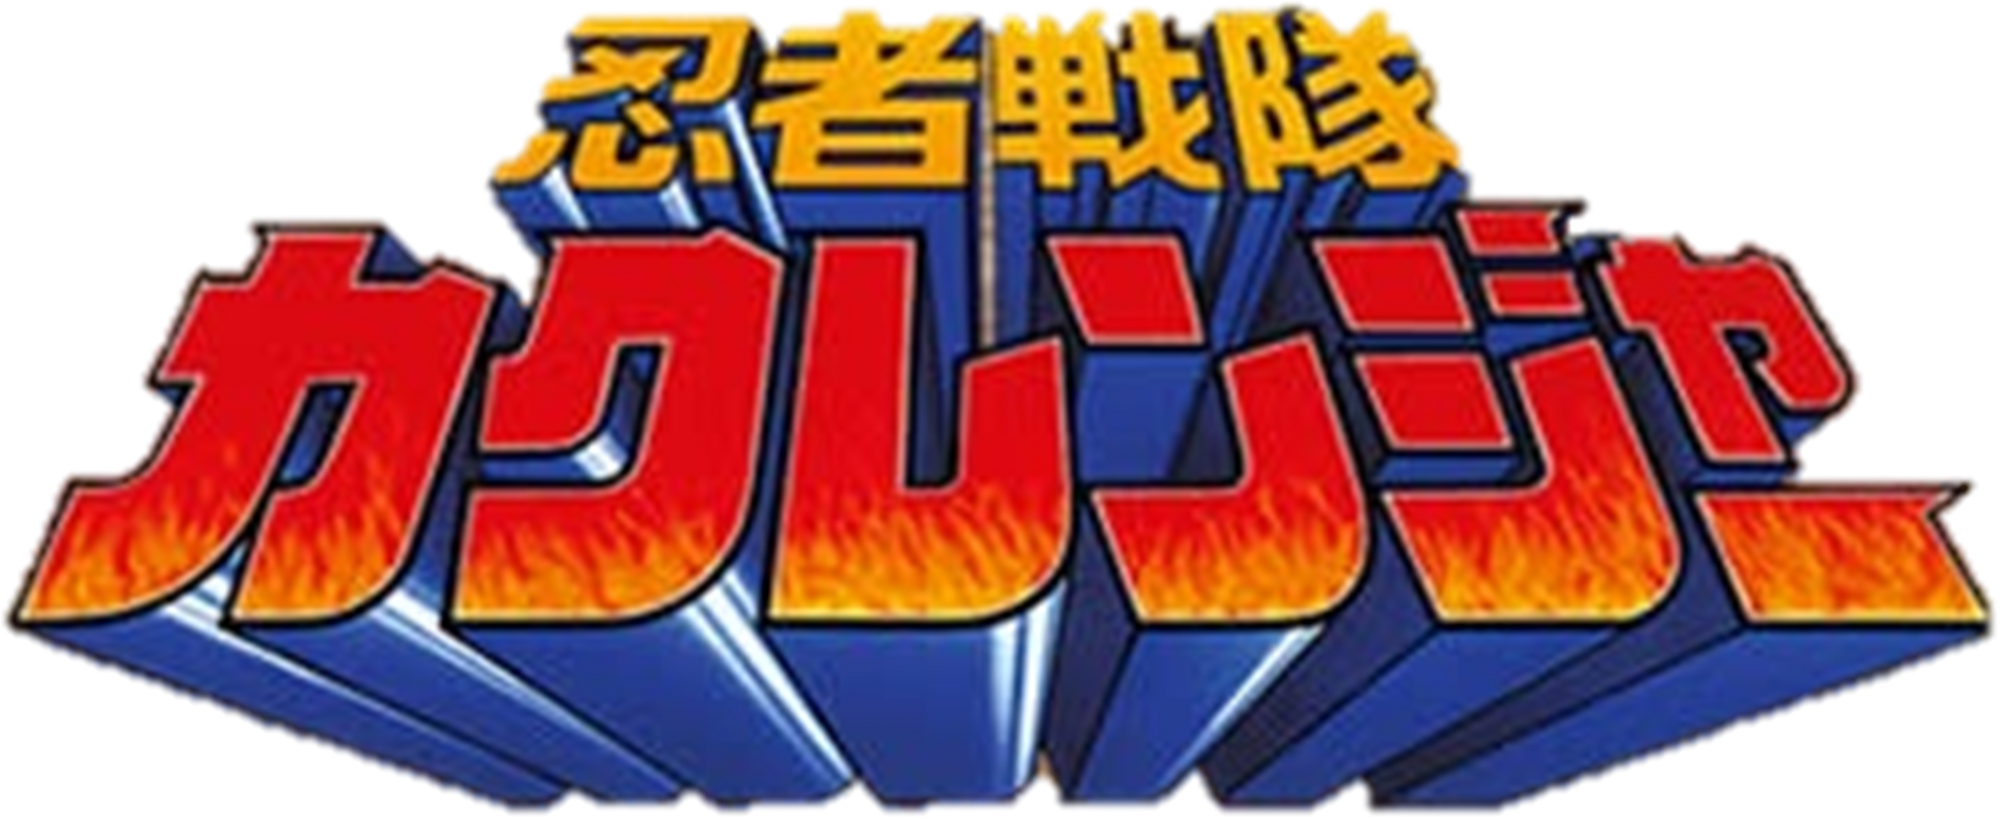 Ninja Sentai Kakuranger Rangerwiki Fandom